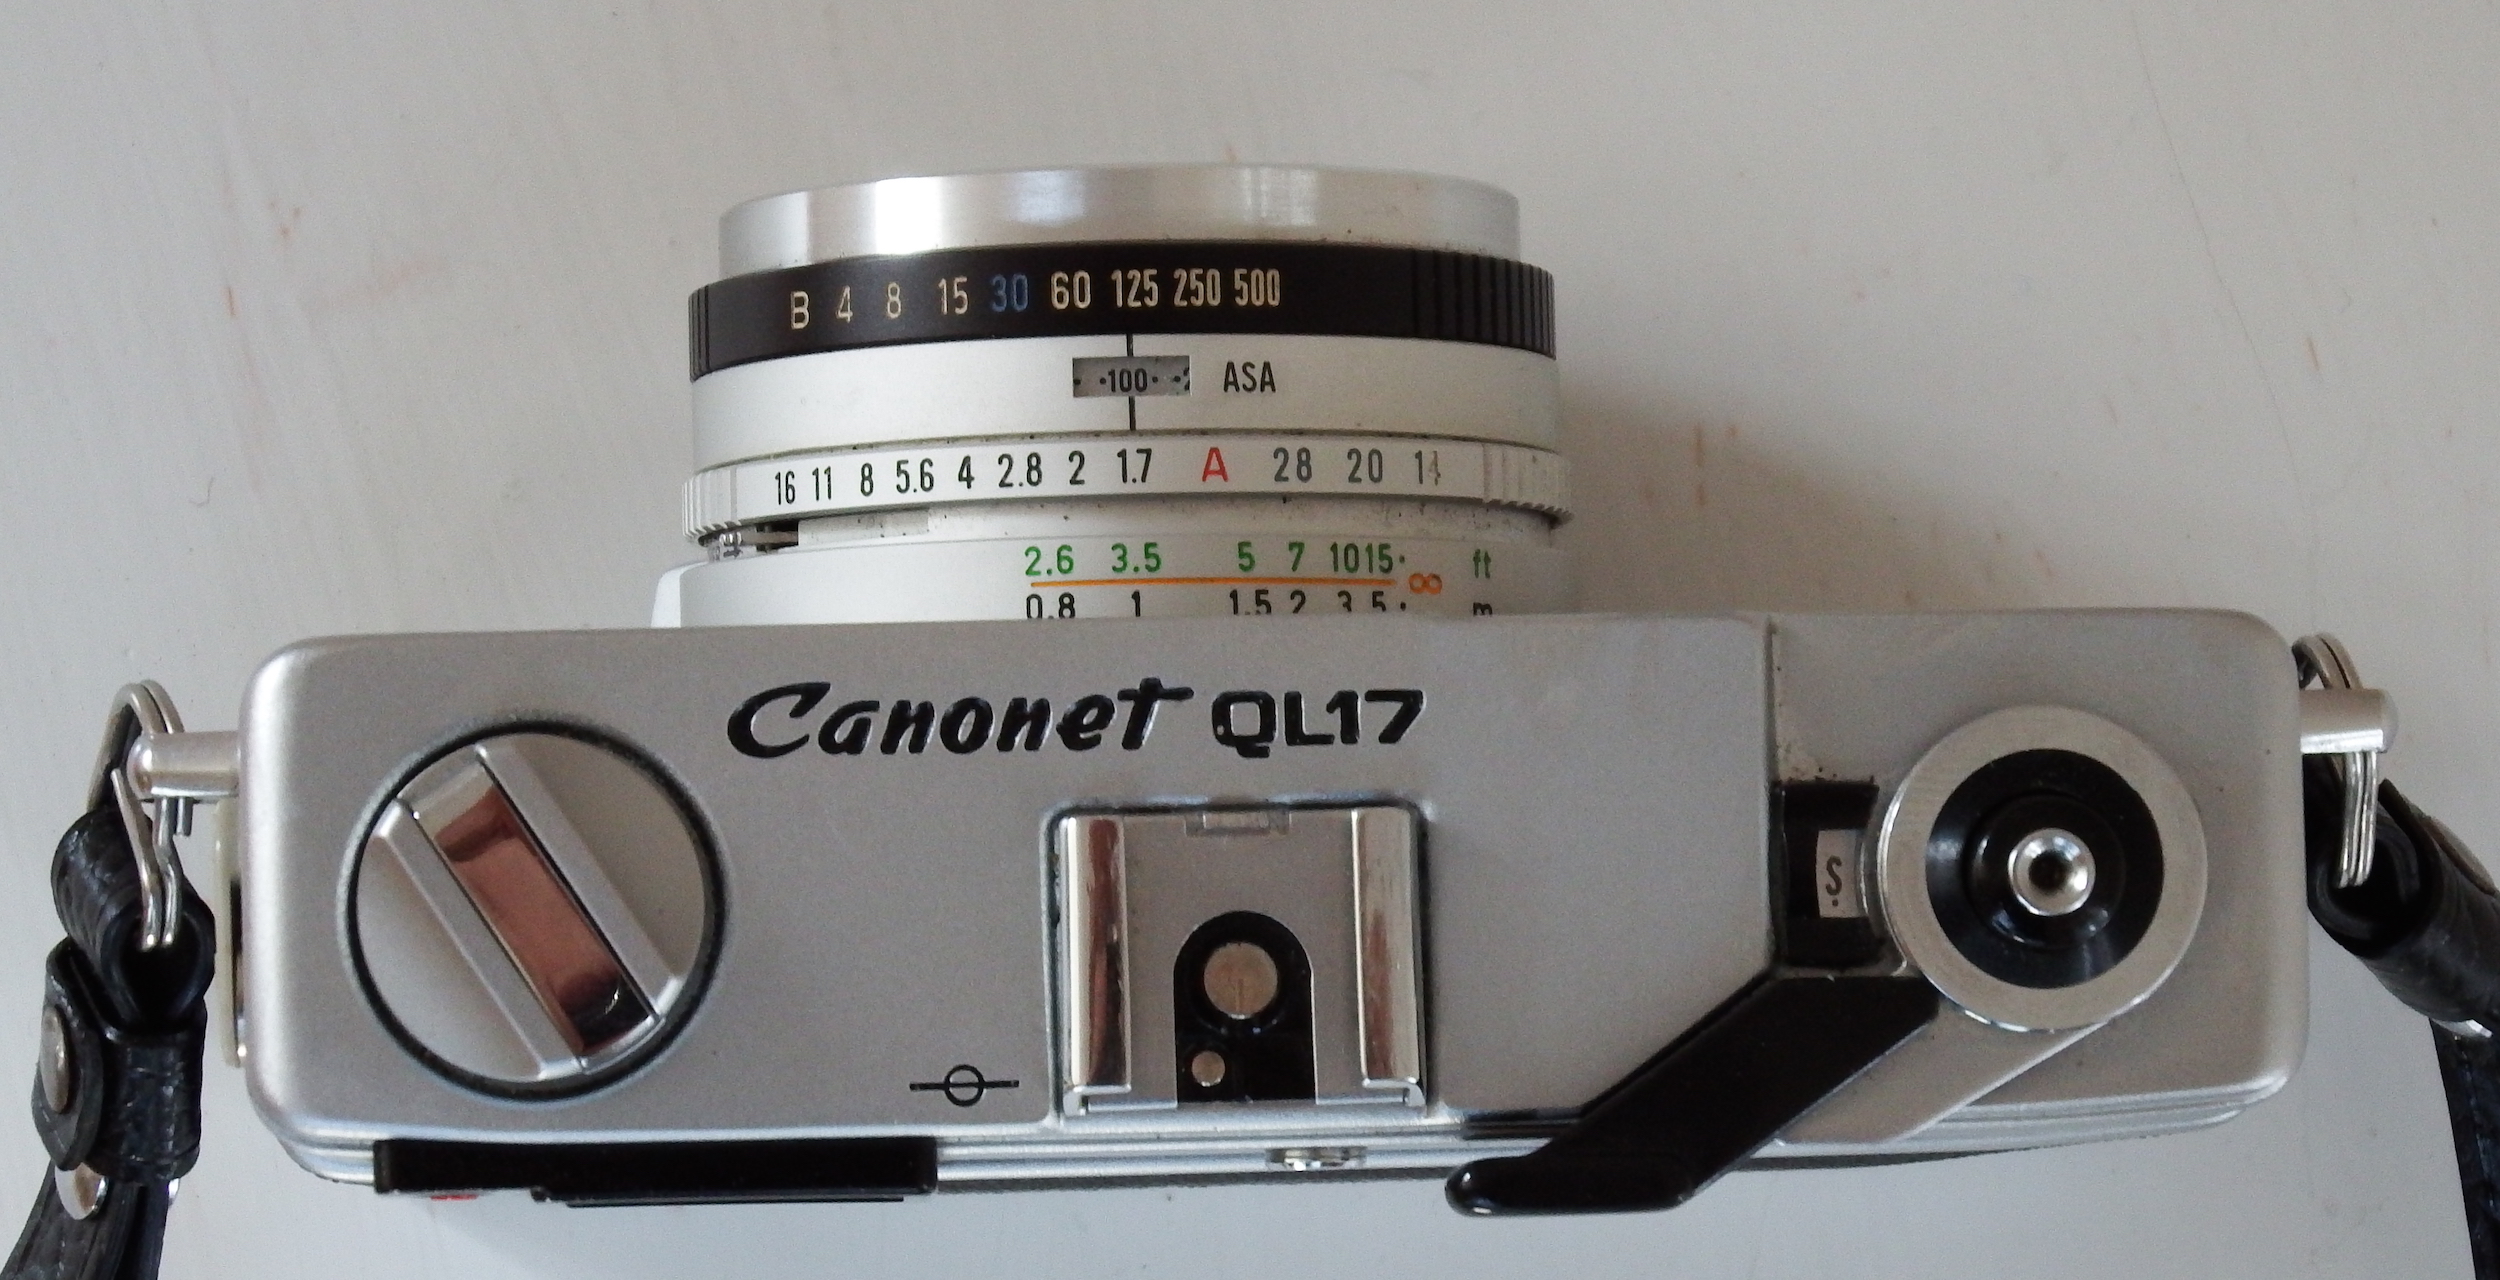 Canon canonet ql17 giii manual